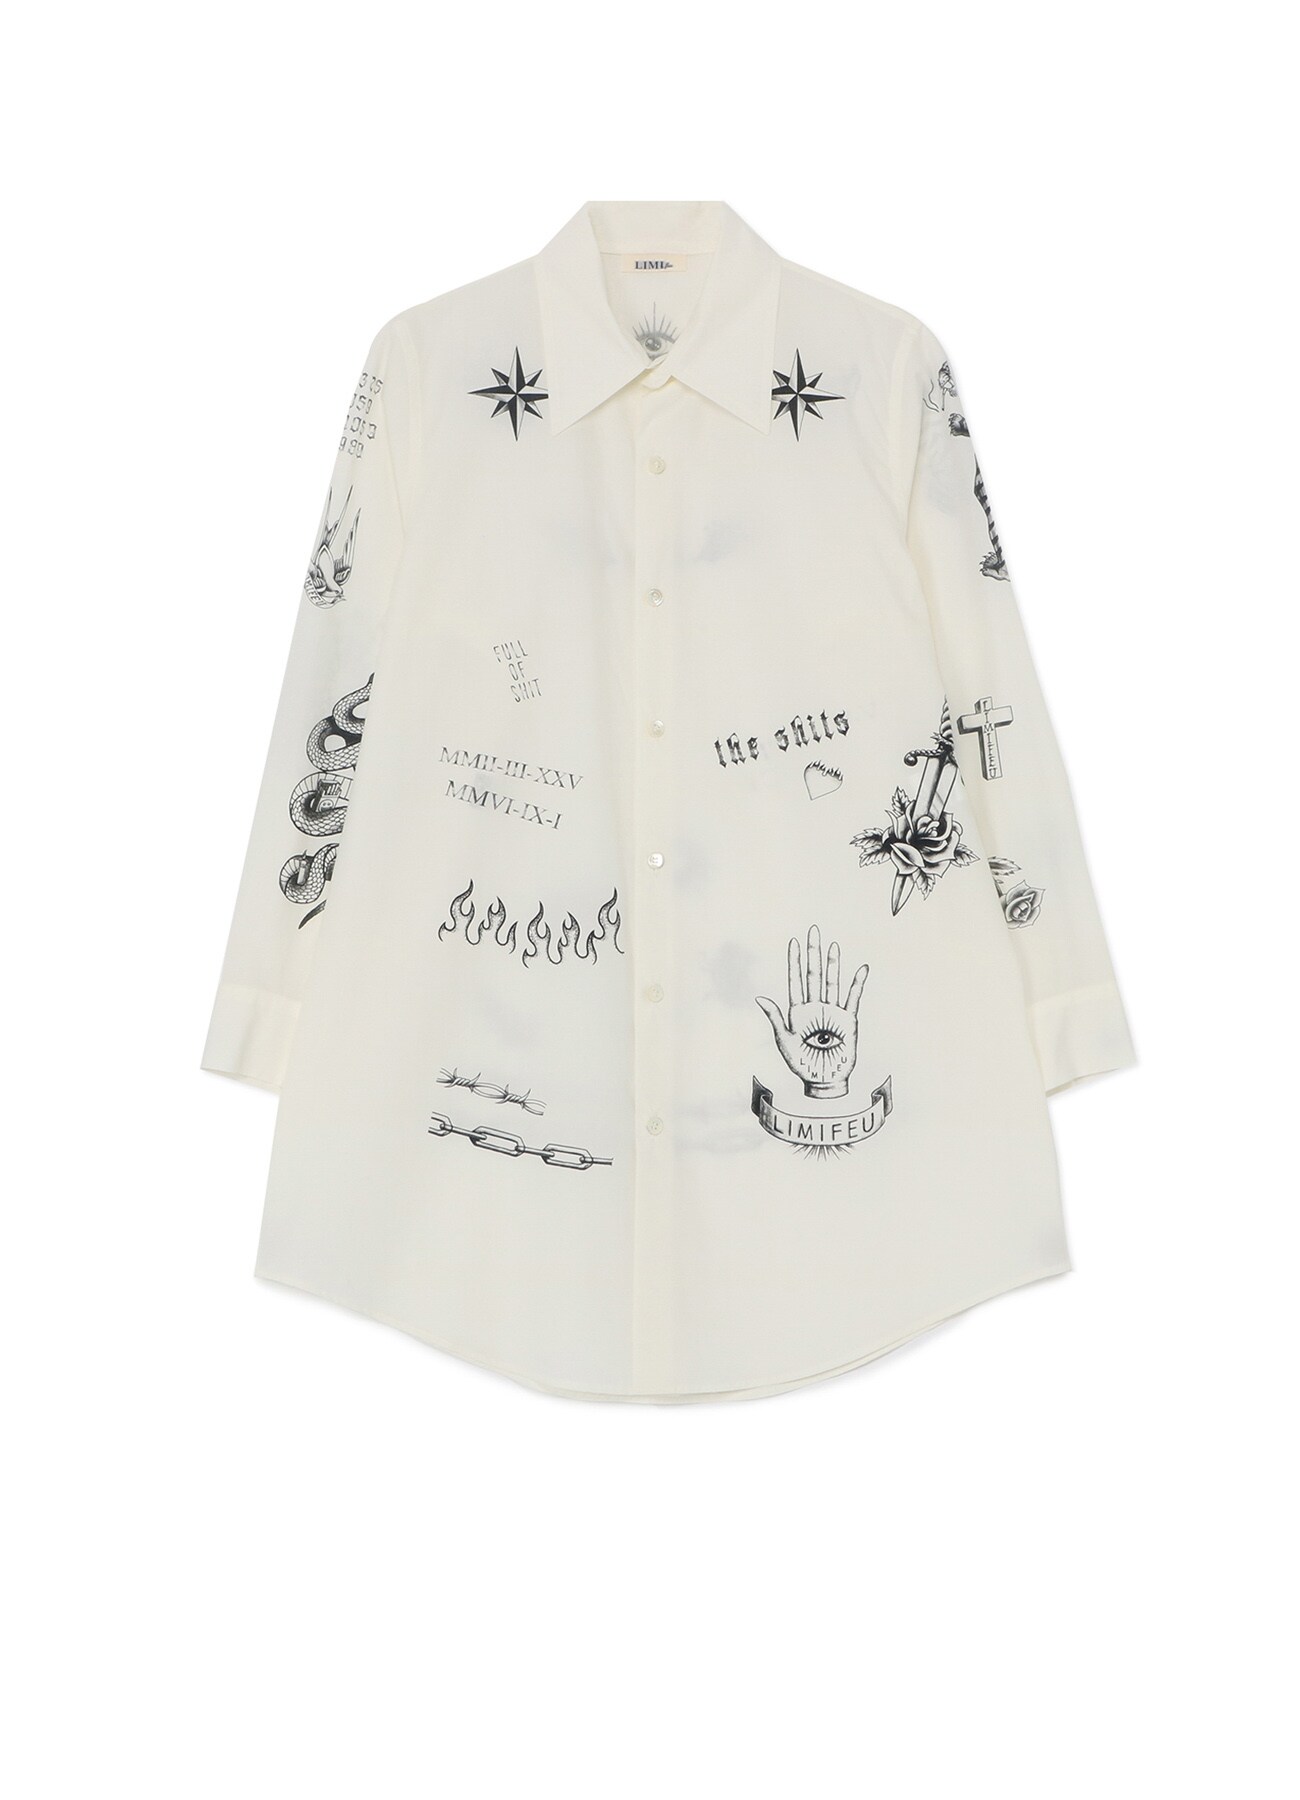 Kleding Gender-neutrale kleding volwassenen Tops & T-shirts Oxfords LIMI FEU Yohji Yamamoto Rayon Shirt Sz Small Made in Japan 